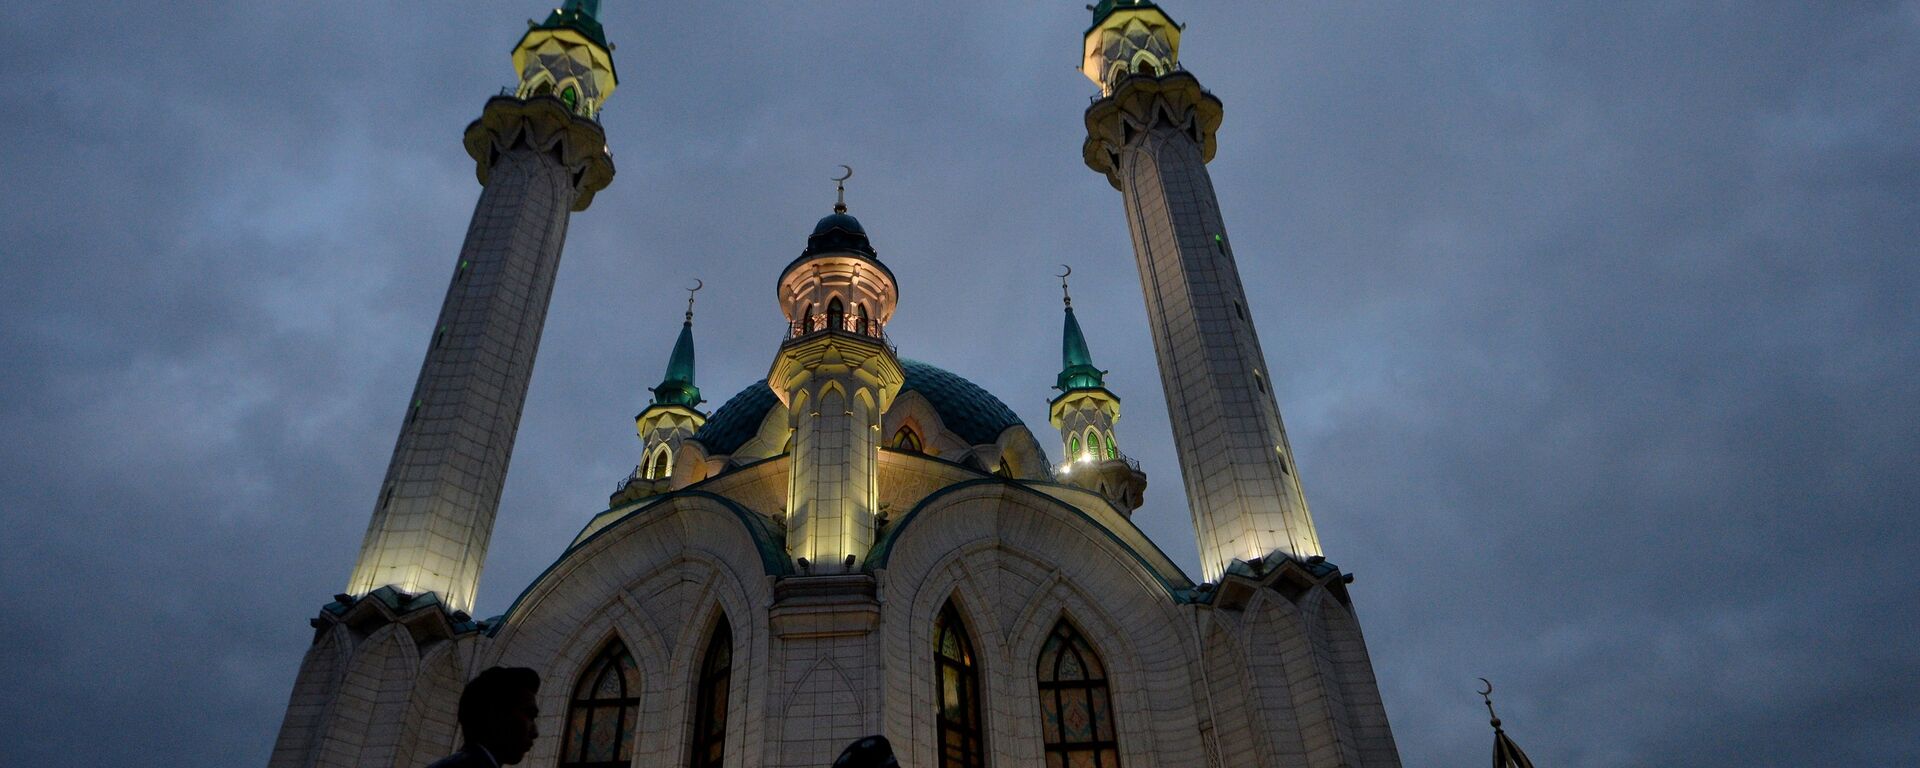 Мечеть Кул-Шариф в Казани - Sputnik Грузия, 1920, 08.03.2021